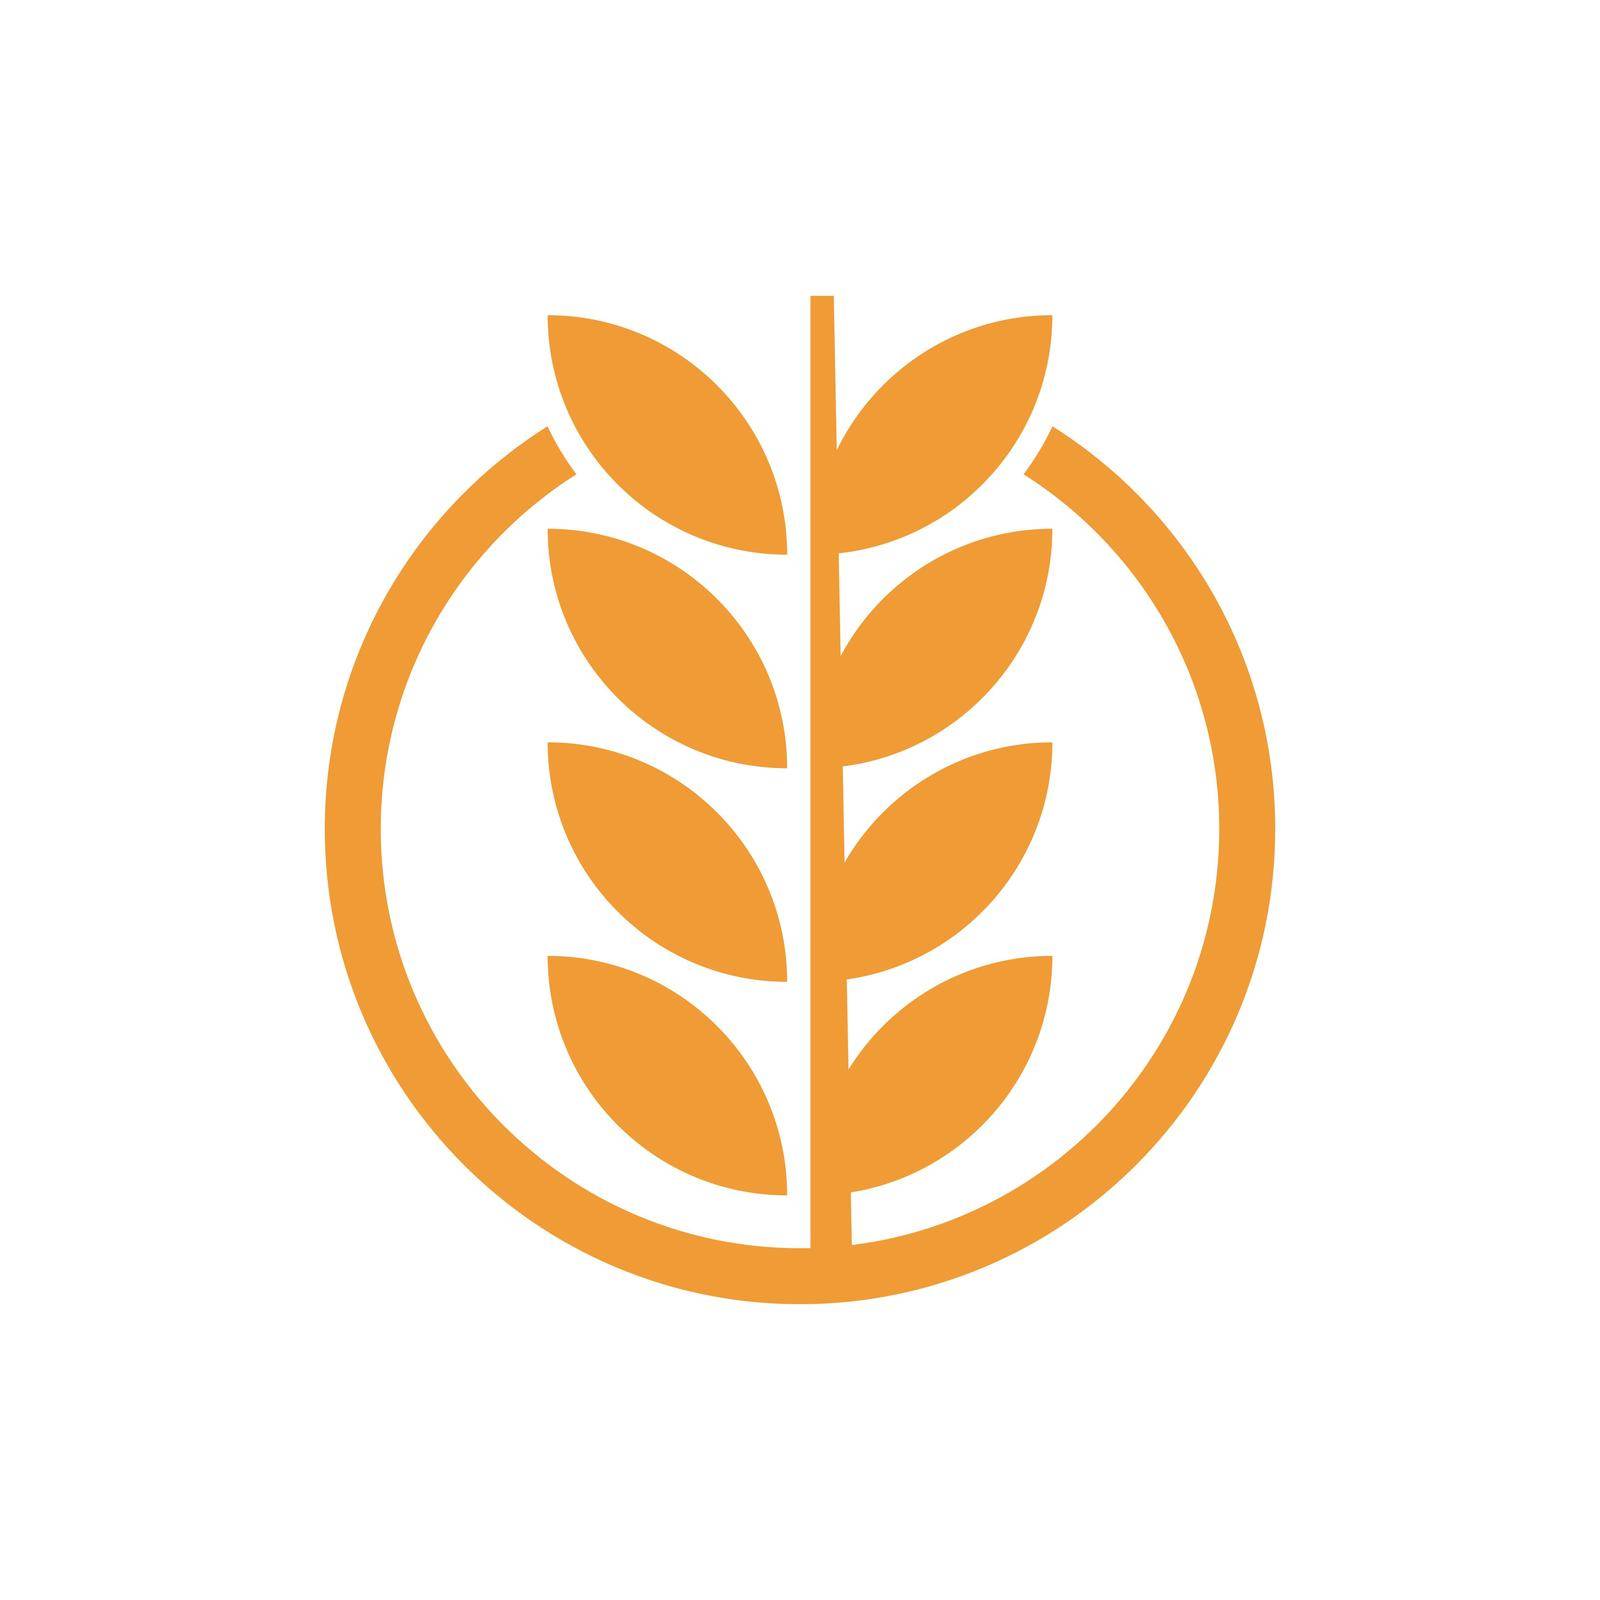 Wheat logo template by awk